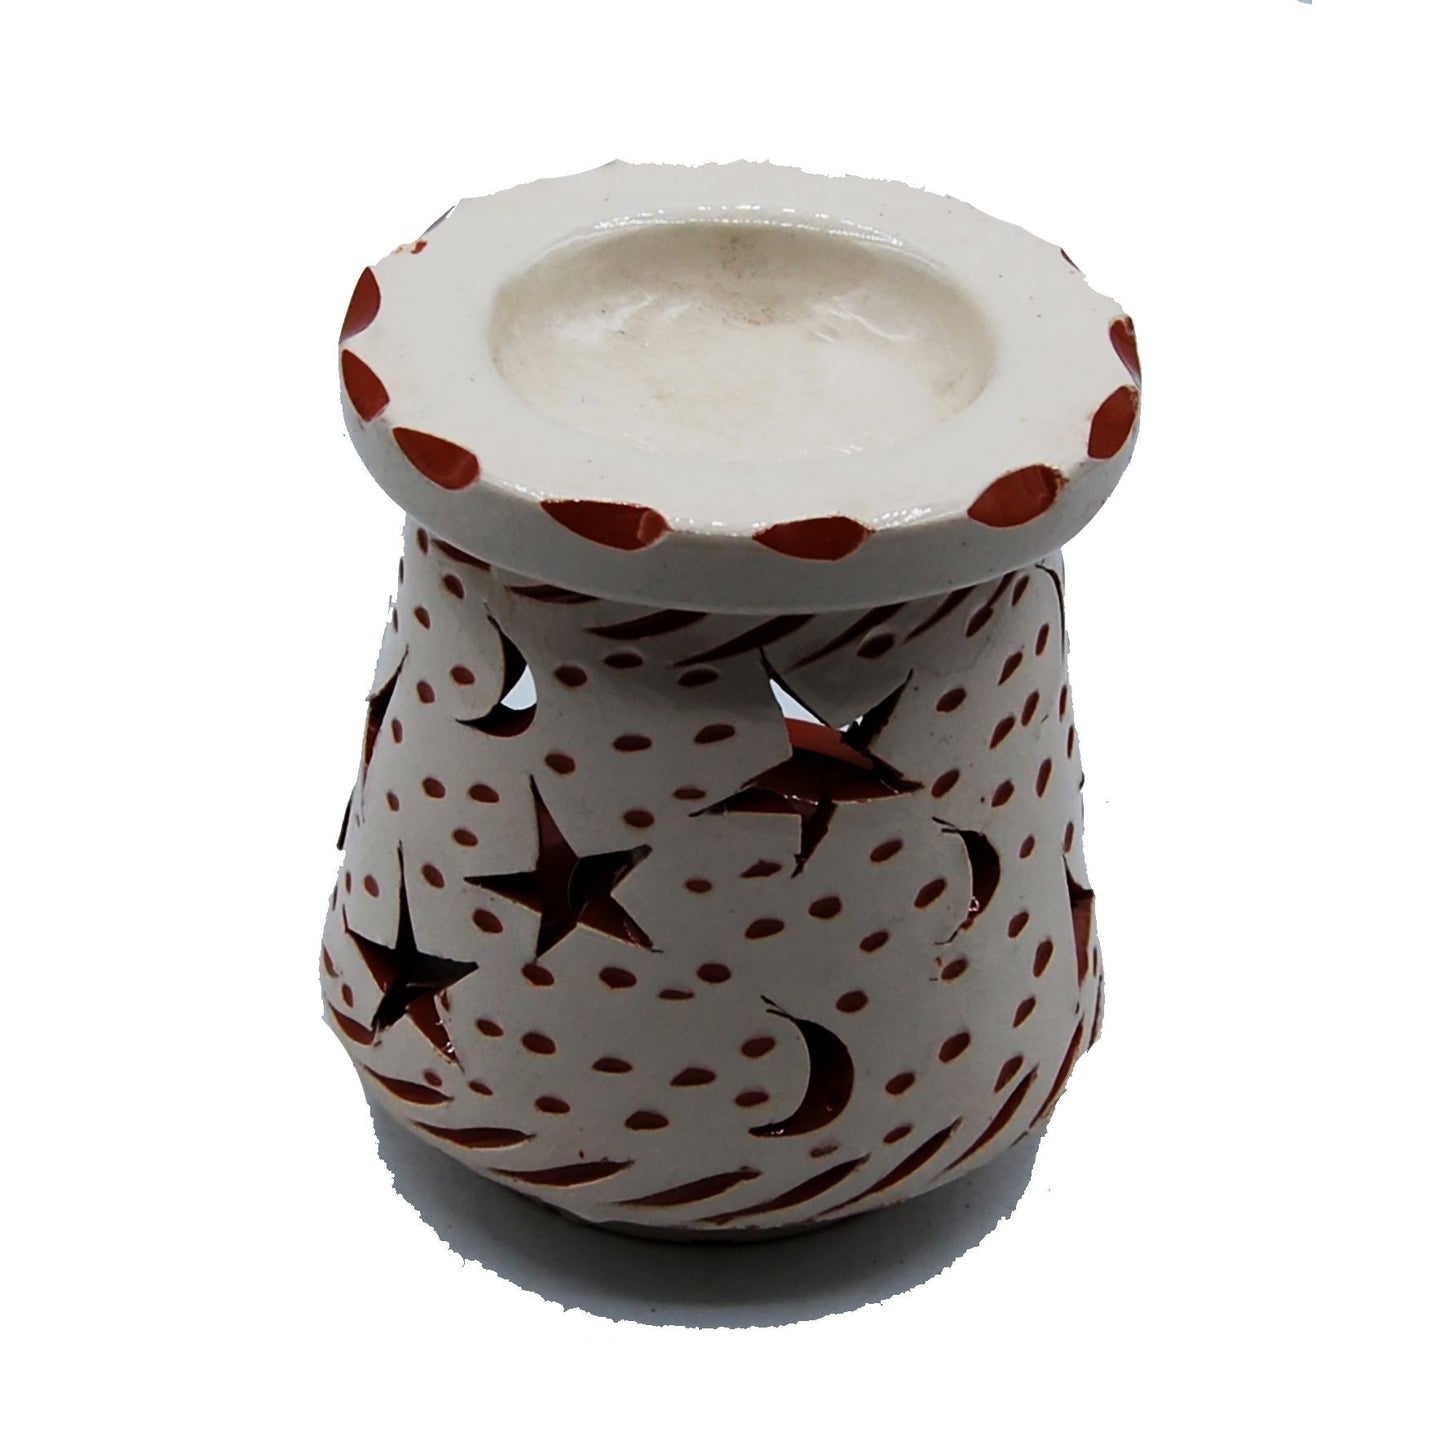 Arredamento Etnico Profumatore Ceramica Terre Cuite Marocco 1103201121